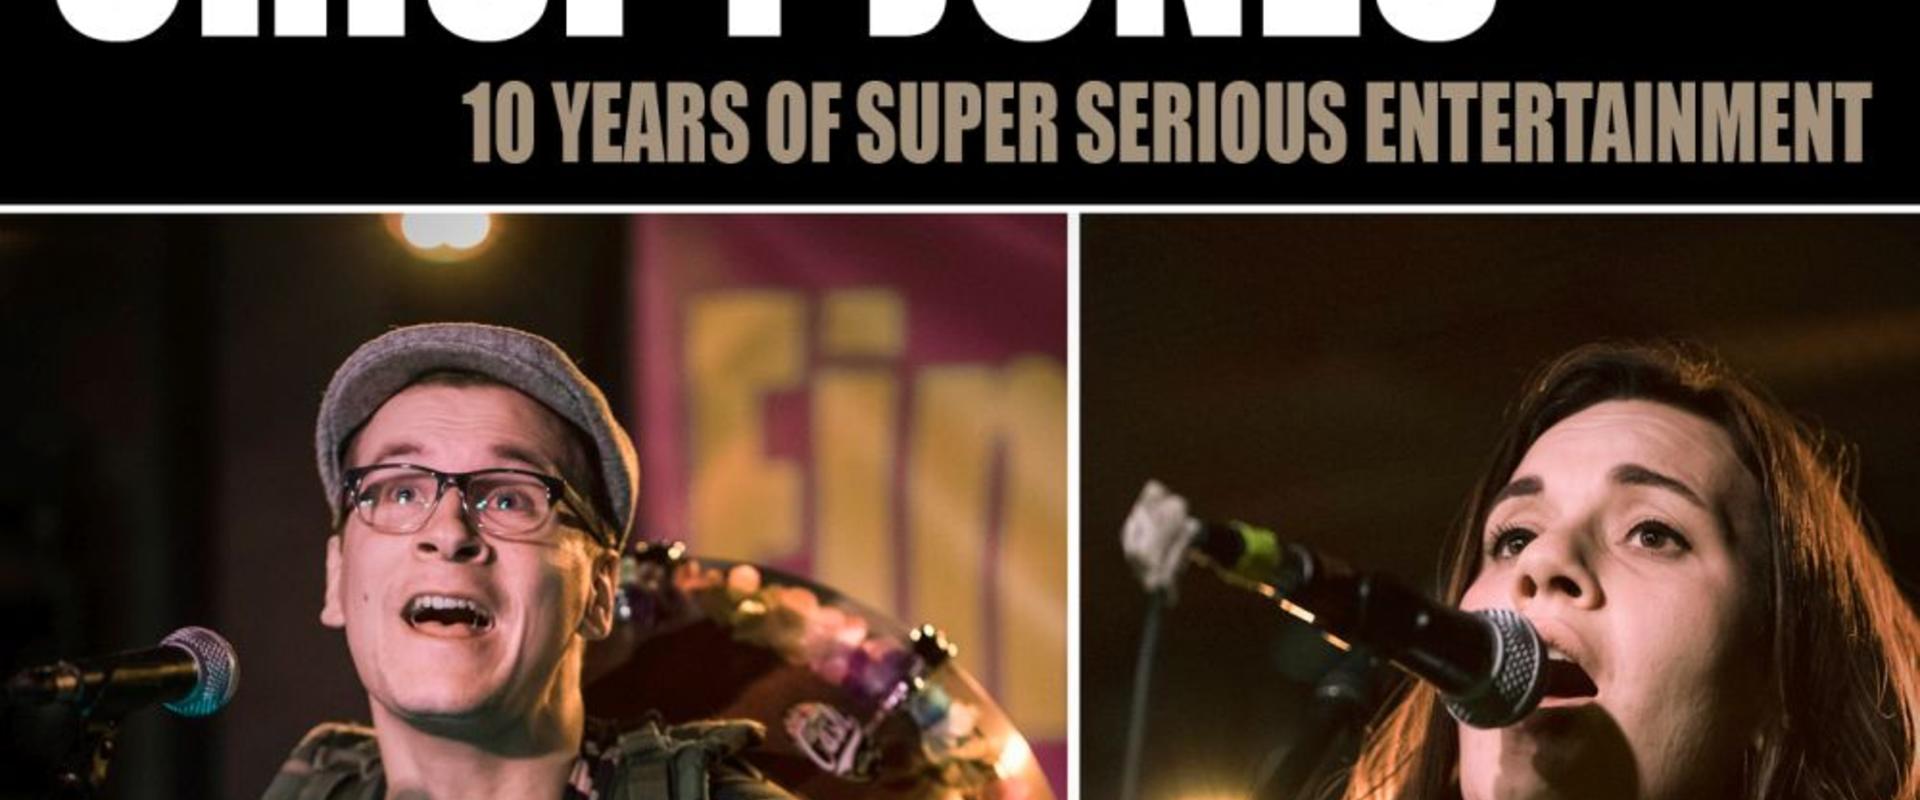 Album: 10 Years of super serious entertainment